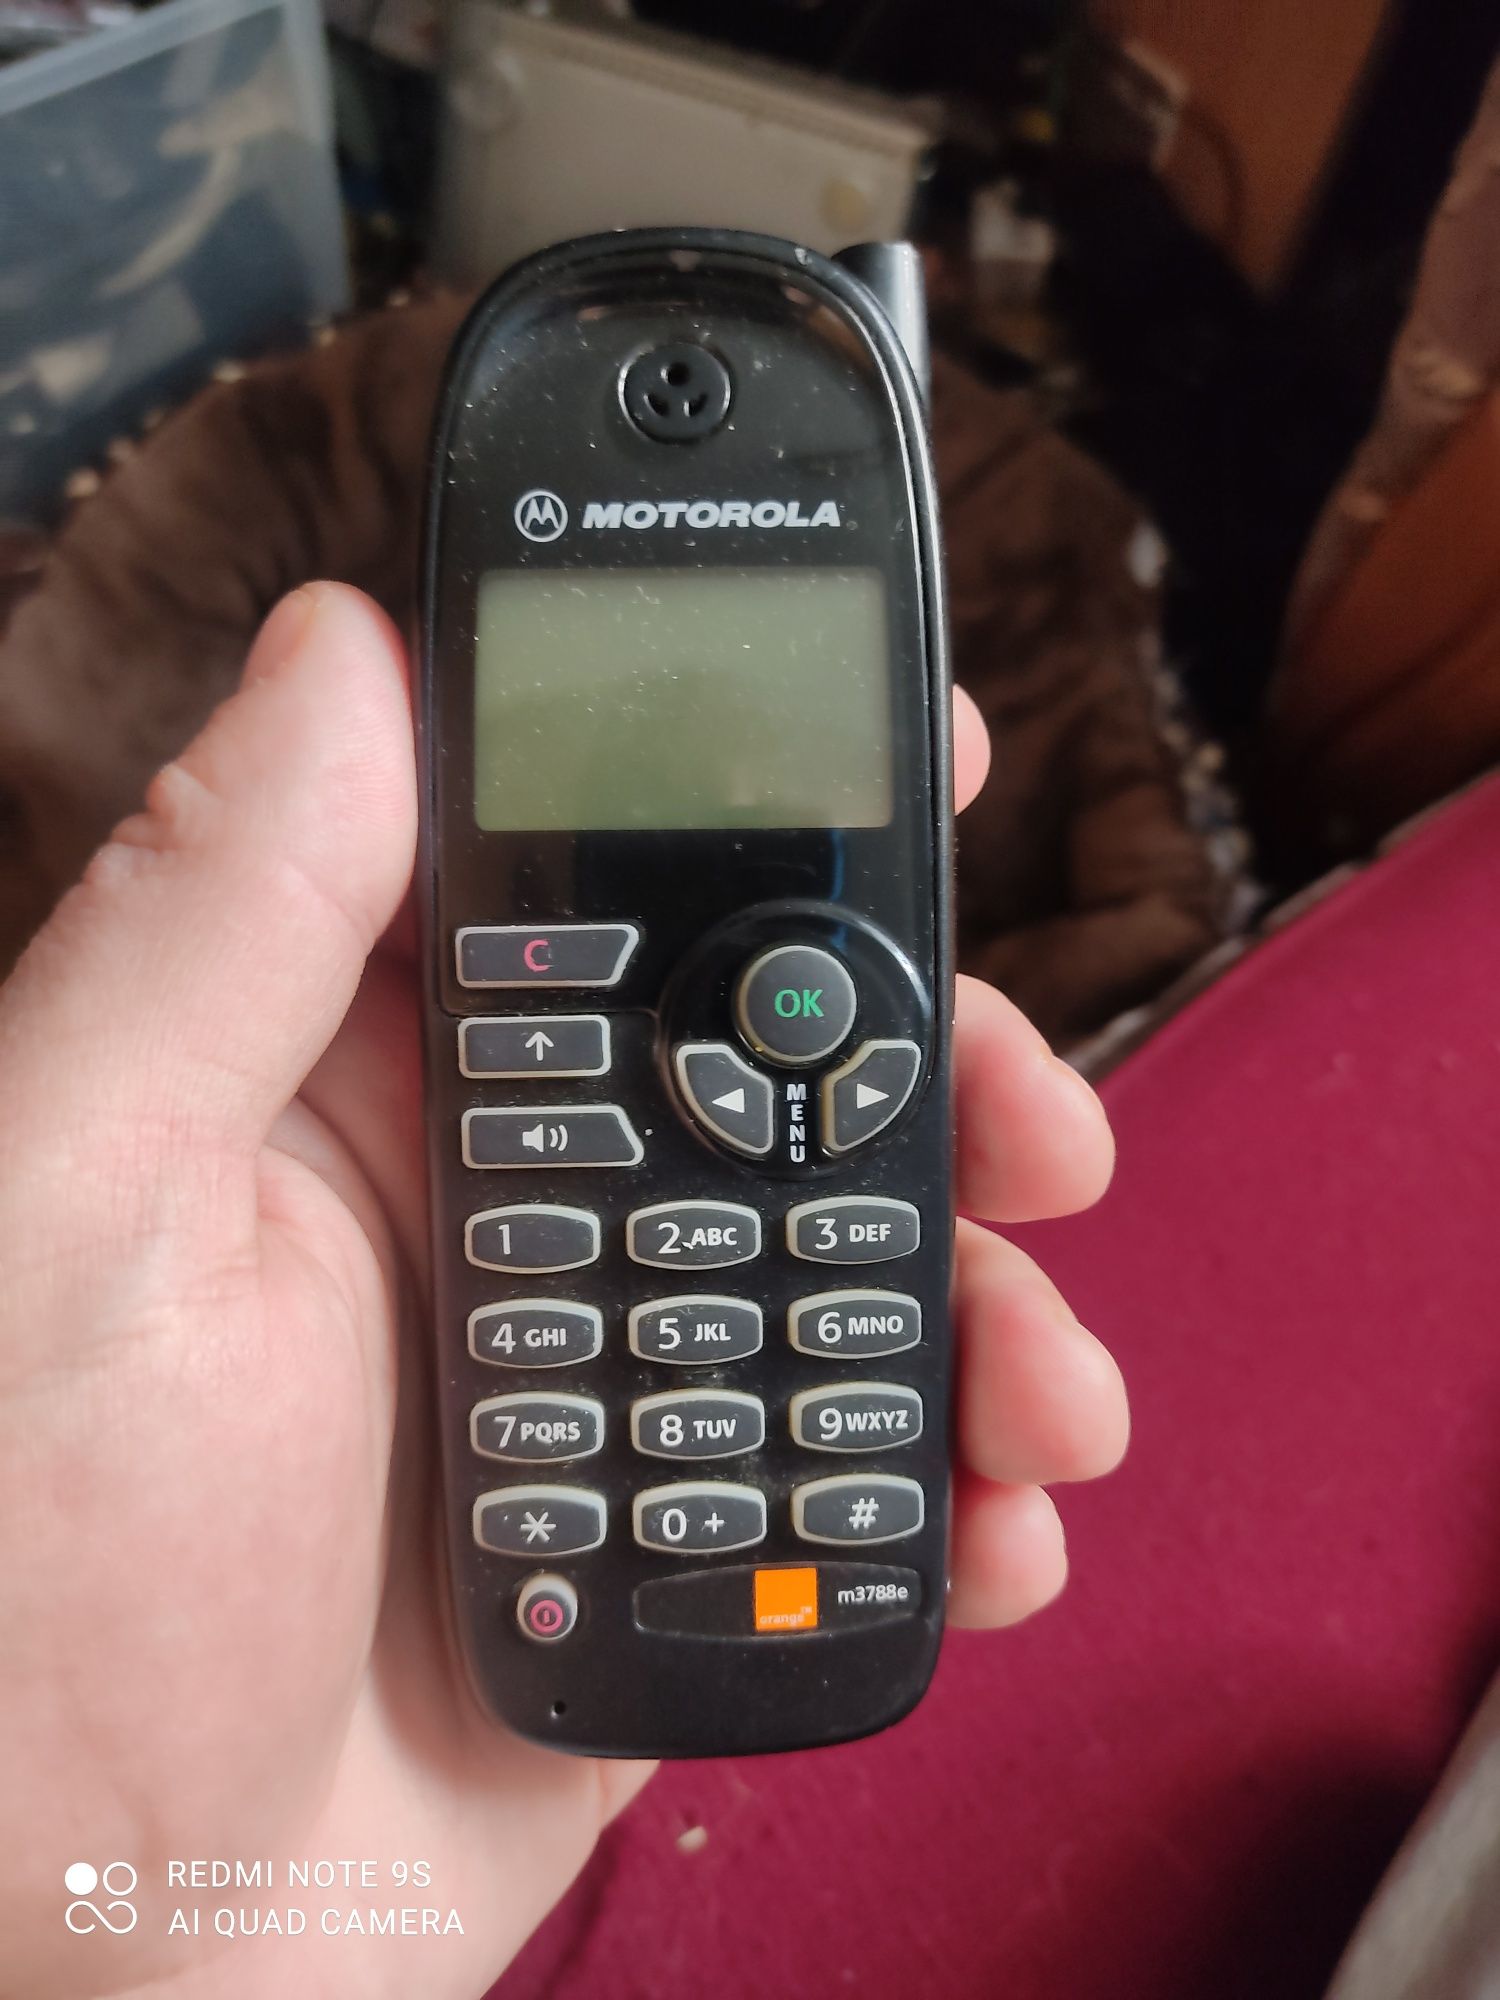 Telefon Motorola m3788e dla kolekcjonerów